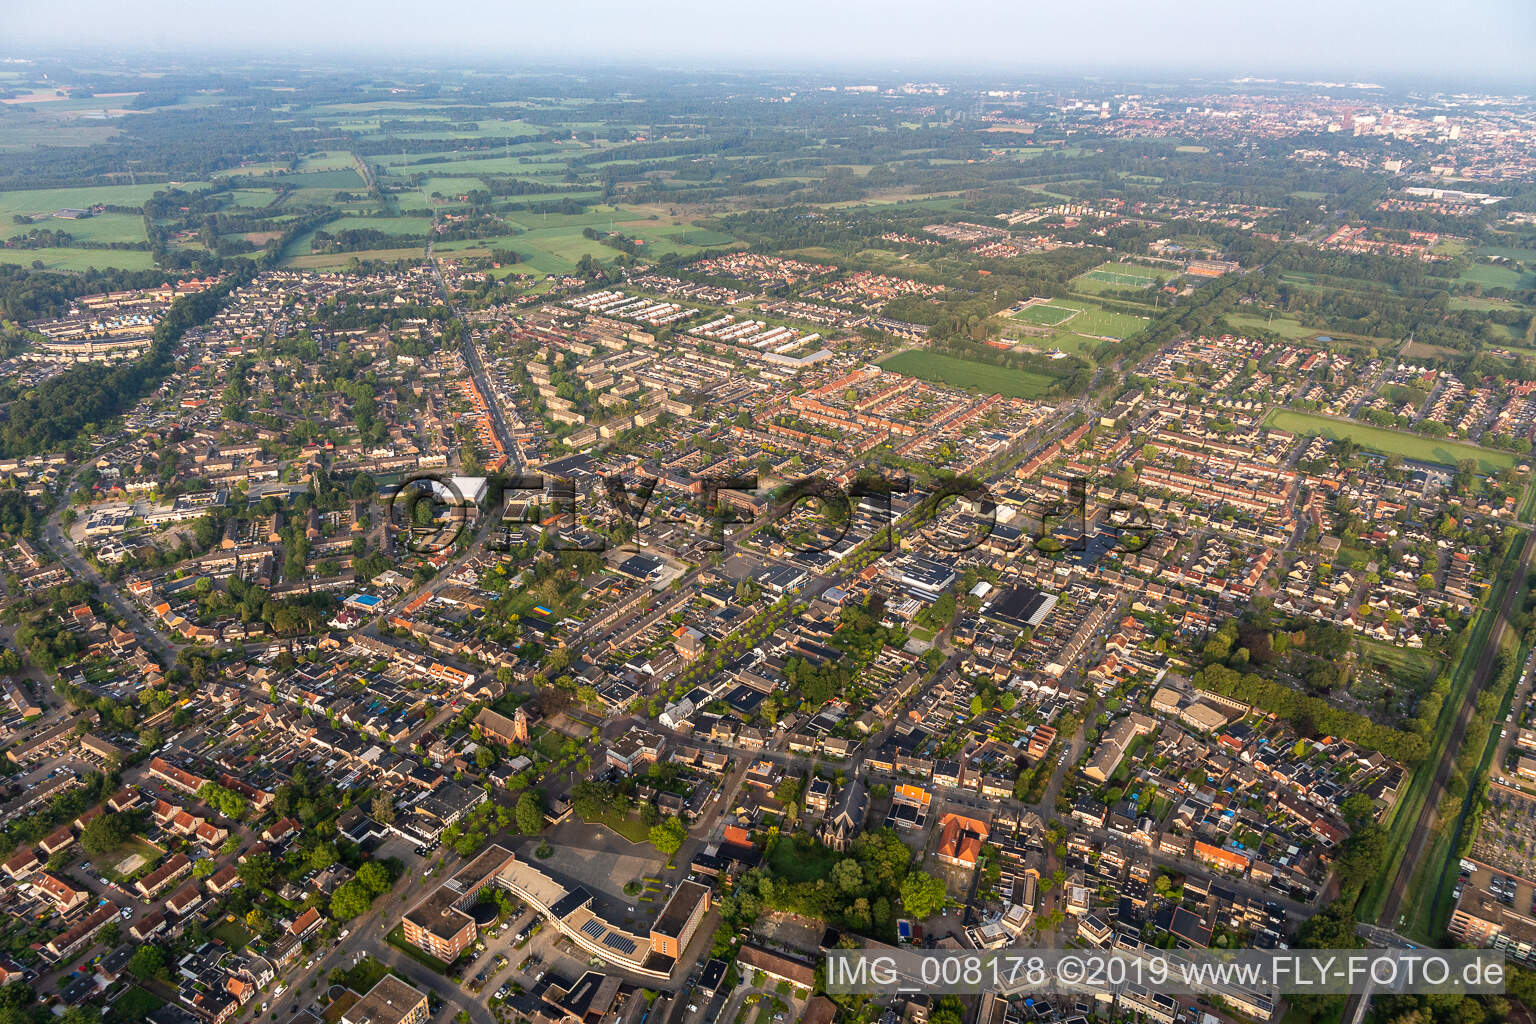 Aerial photograpy of Gronau in the state North Rhine-Westphalia, Germany